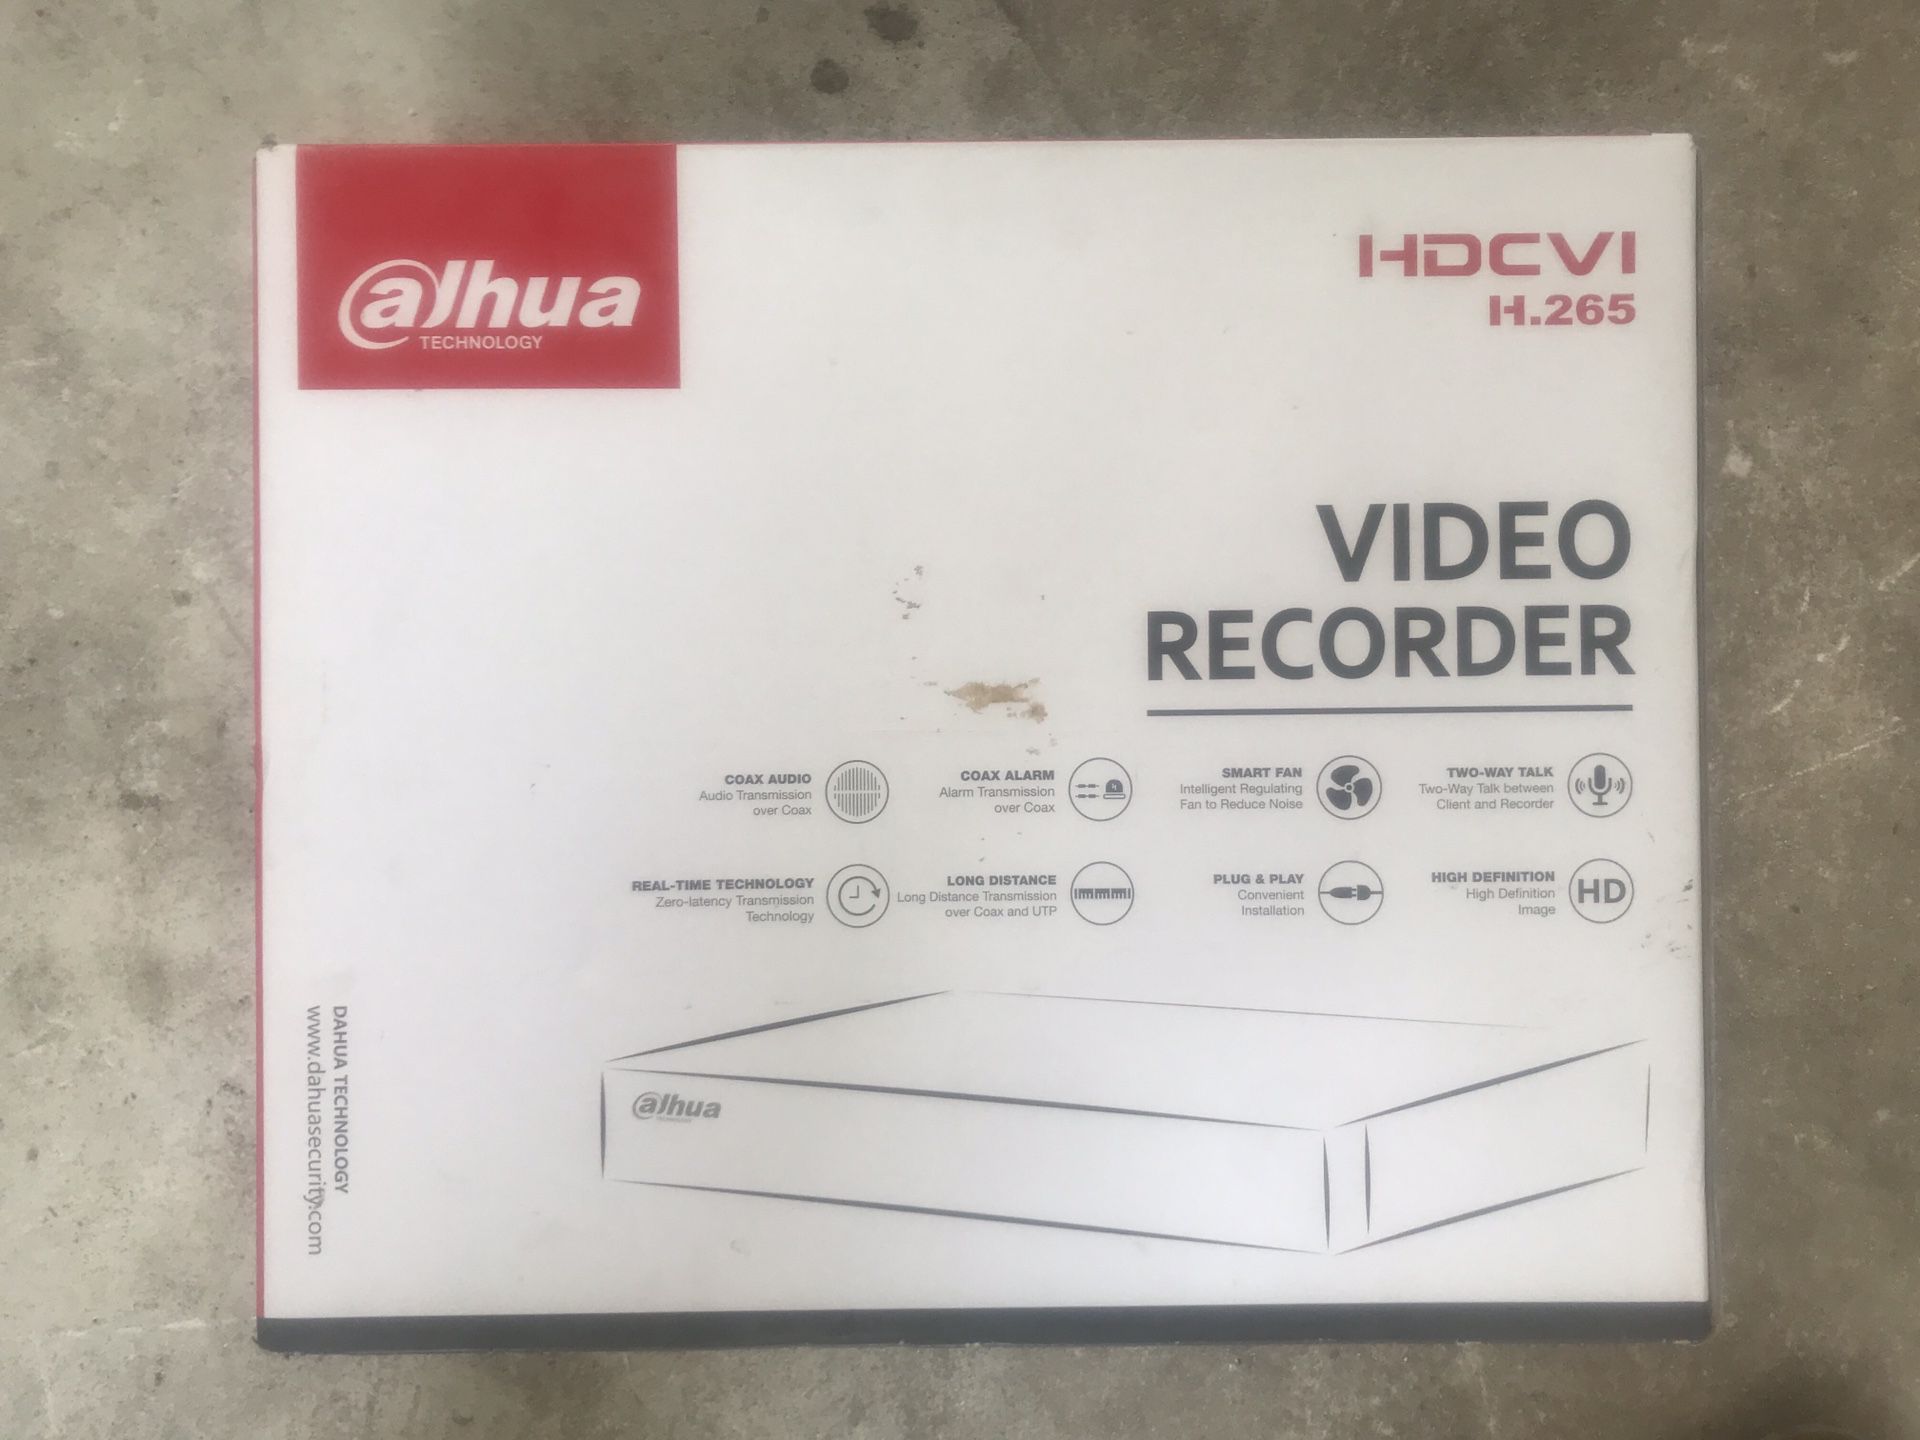 Dahua Video Recorder, Brand New In Box